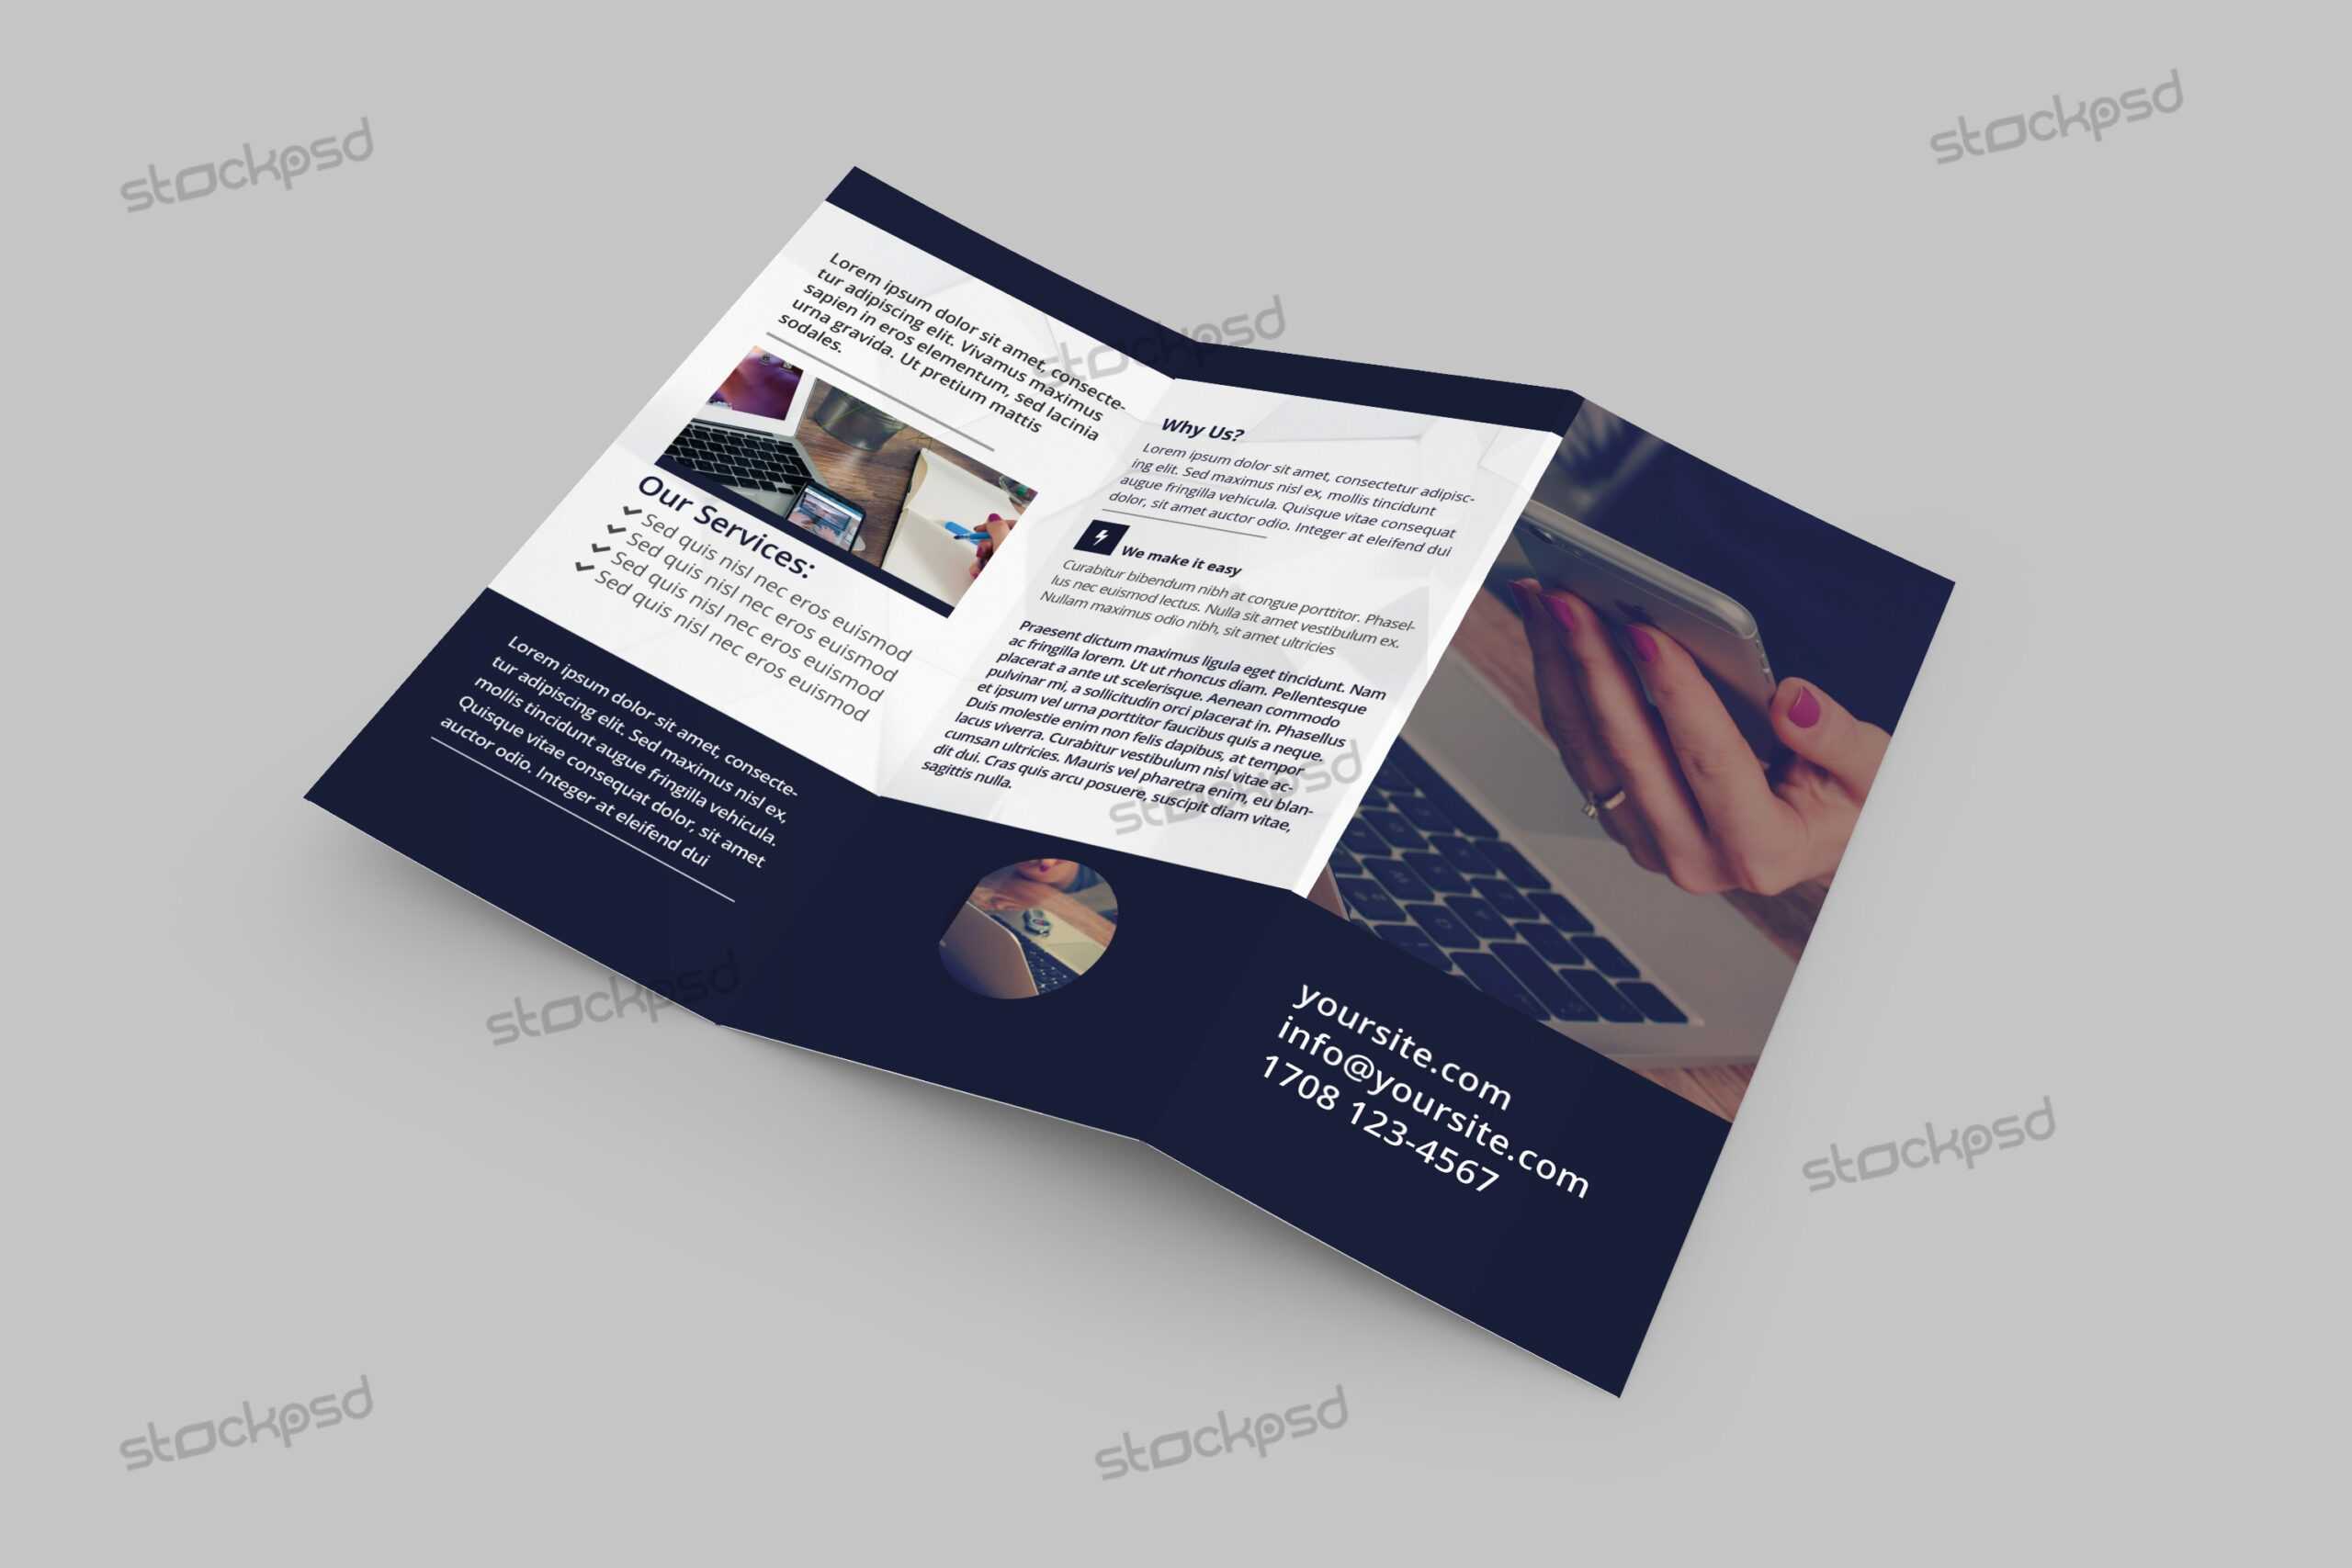 Tri Fold Corporate Brochure – Free Psd Template – Stockpsd With Brochure Psd Template 3 Fold